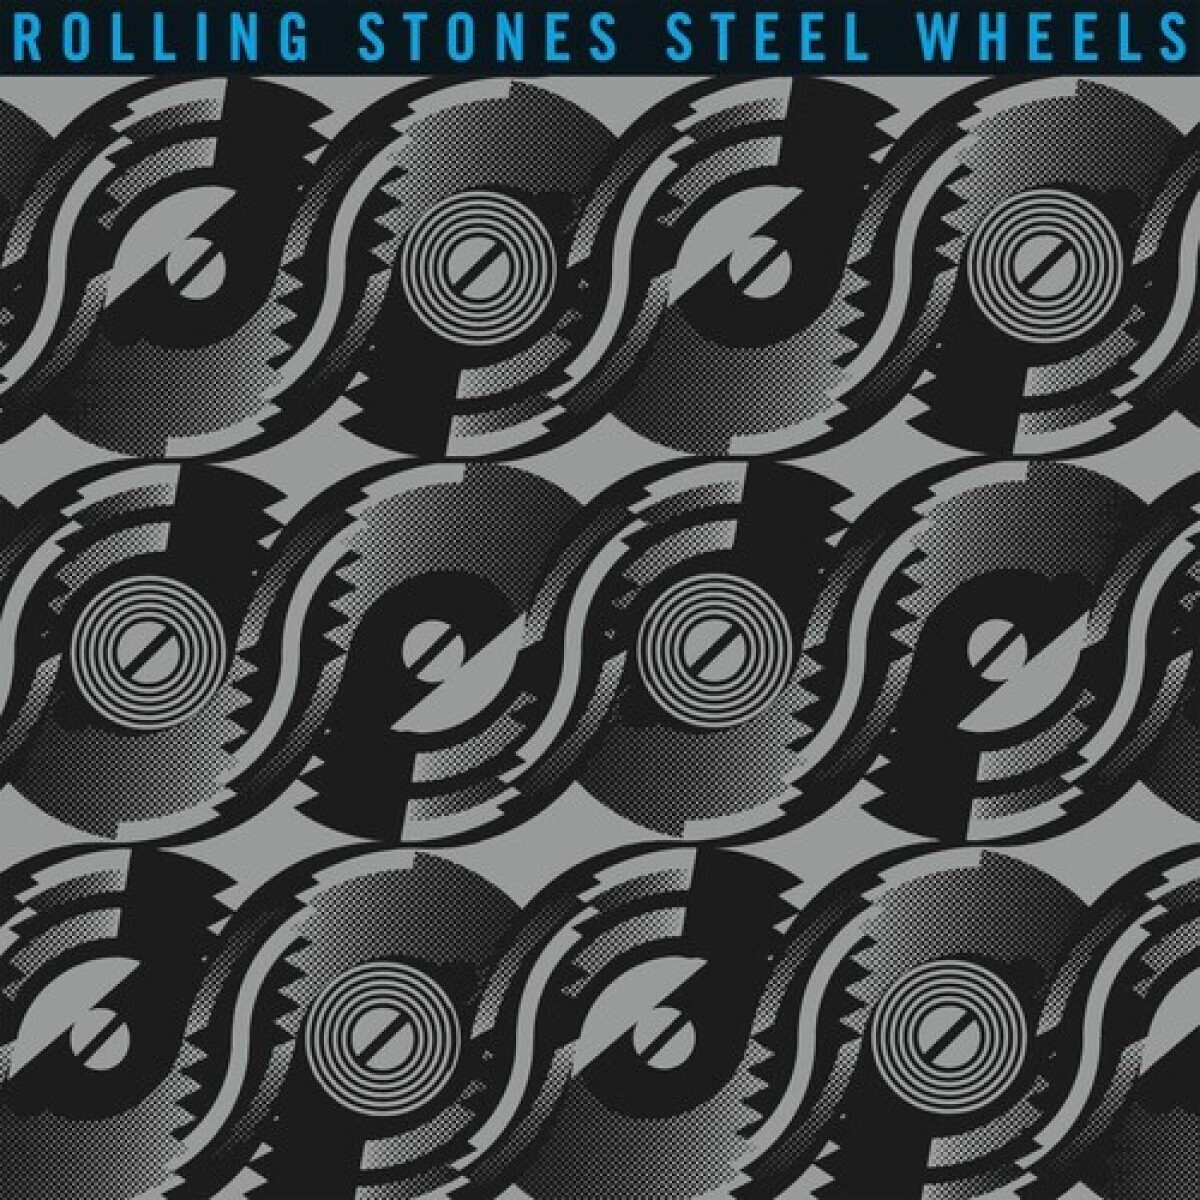 The Rolling Stones - Steel Wheels (ed.2020) - Vinilo 